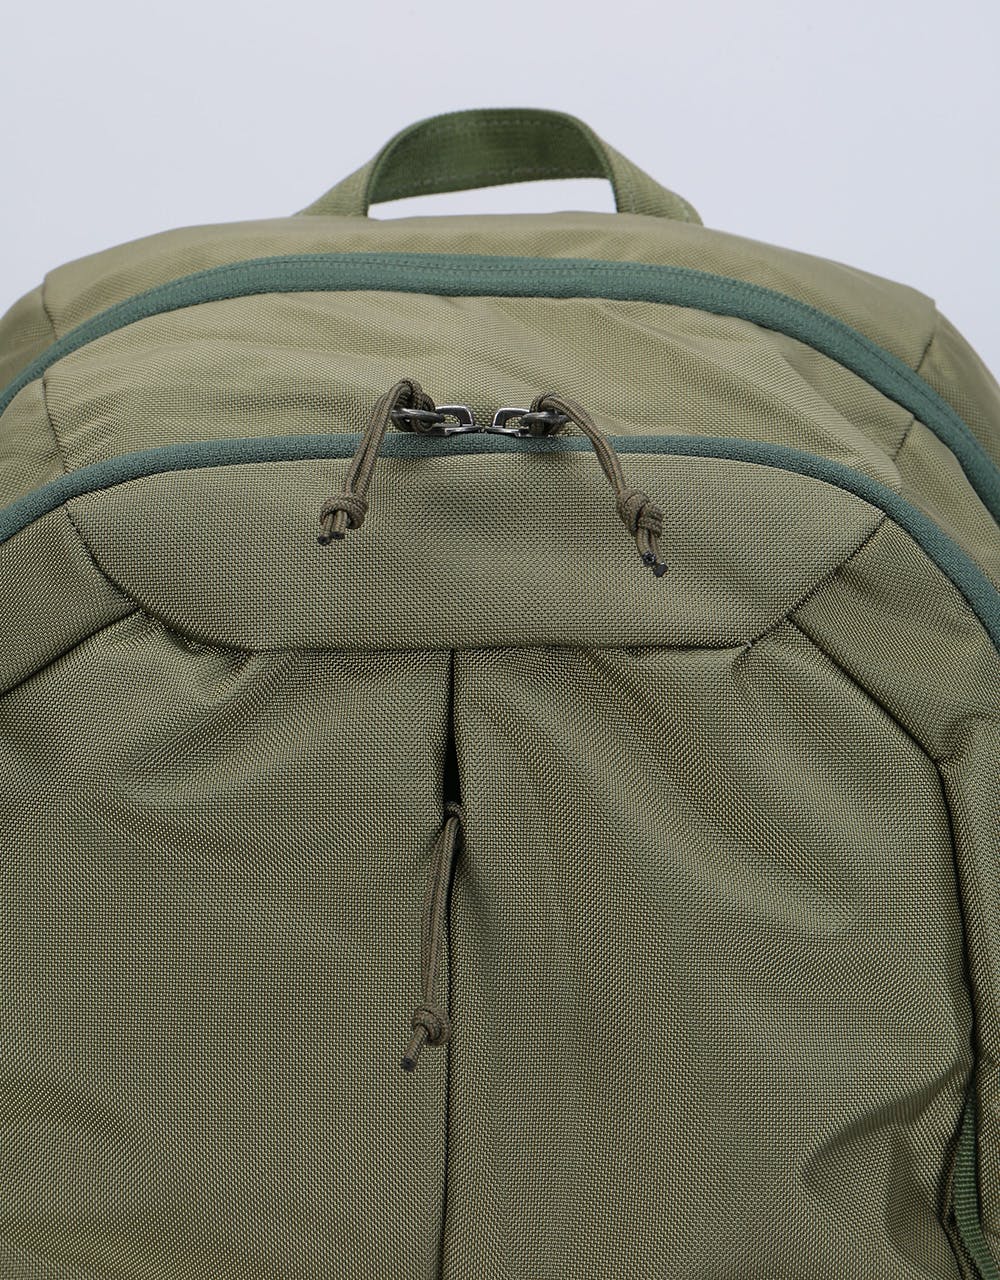 Patagonia Refugio Pack 28L Backpack - Fatigue Green